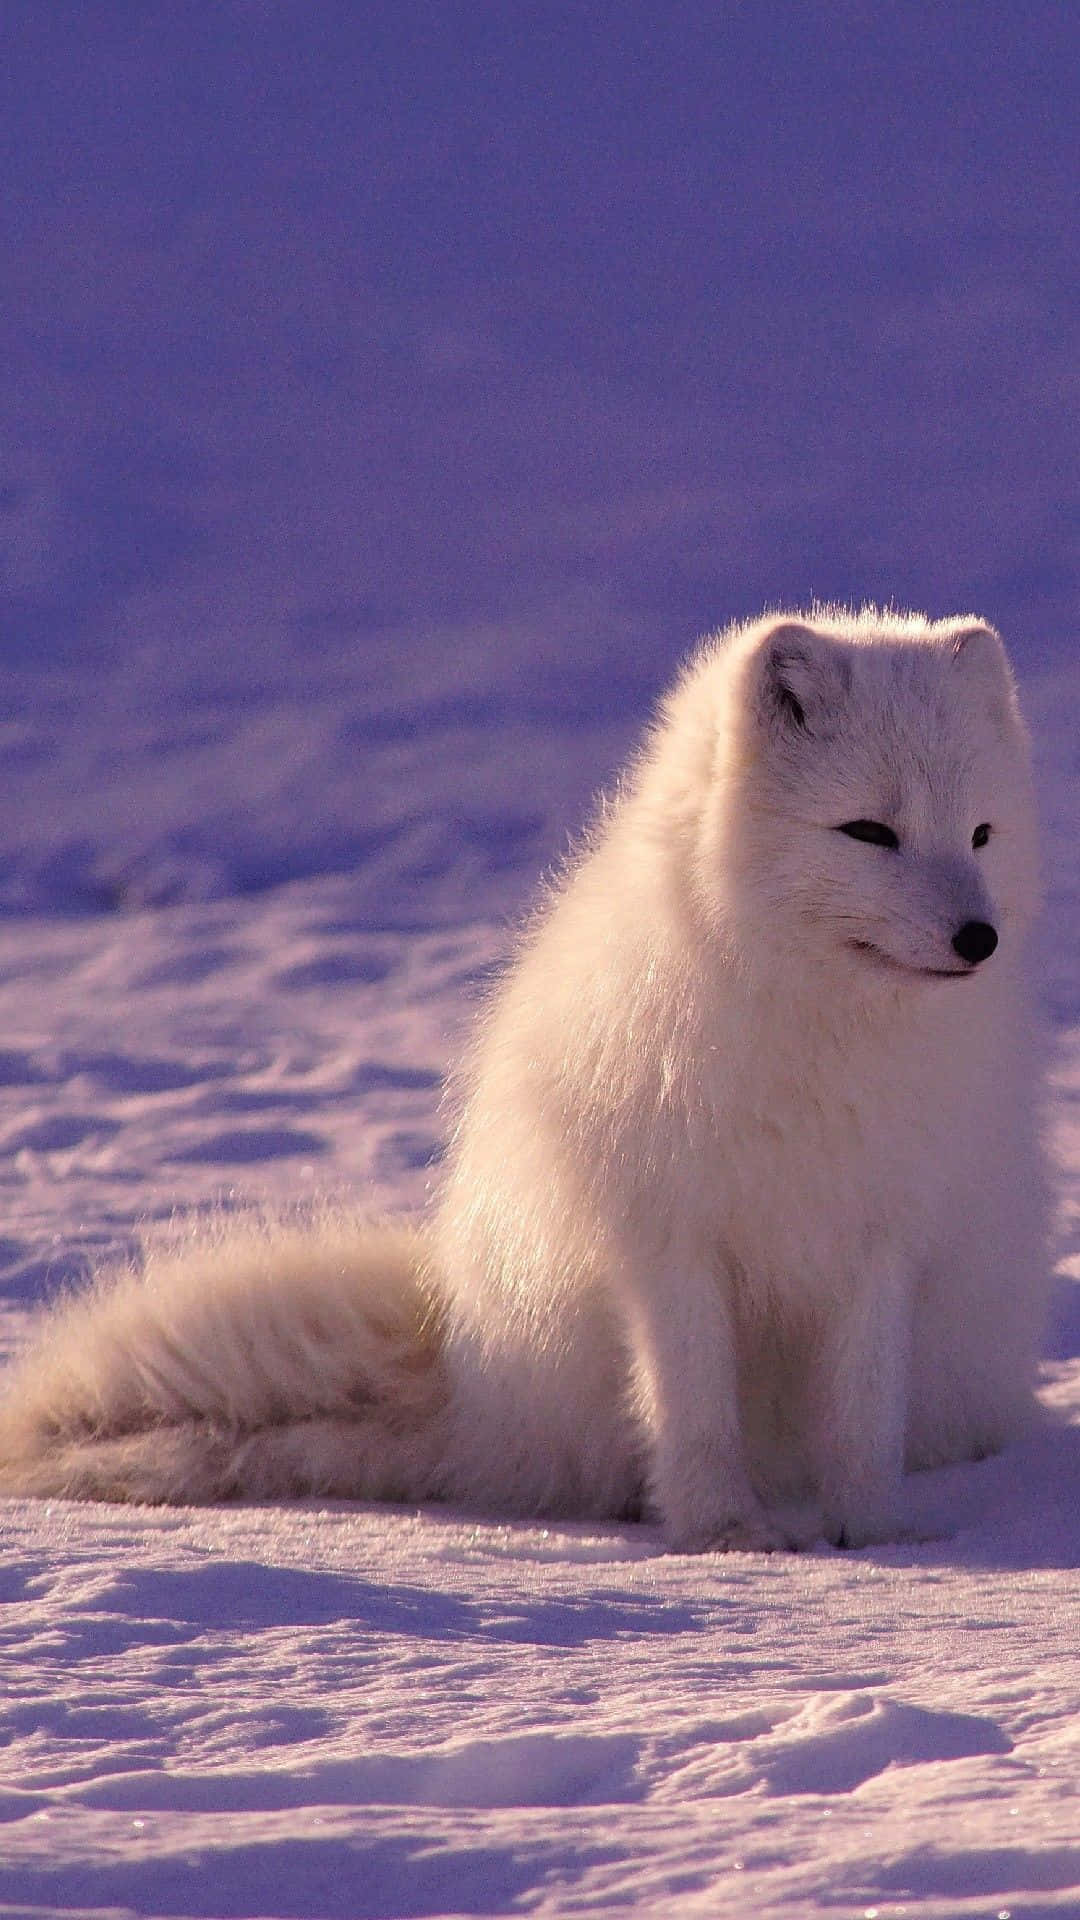 Furry Arctic Fox in its Natural Habitat